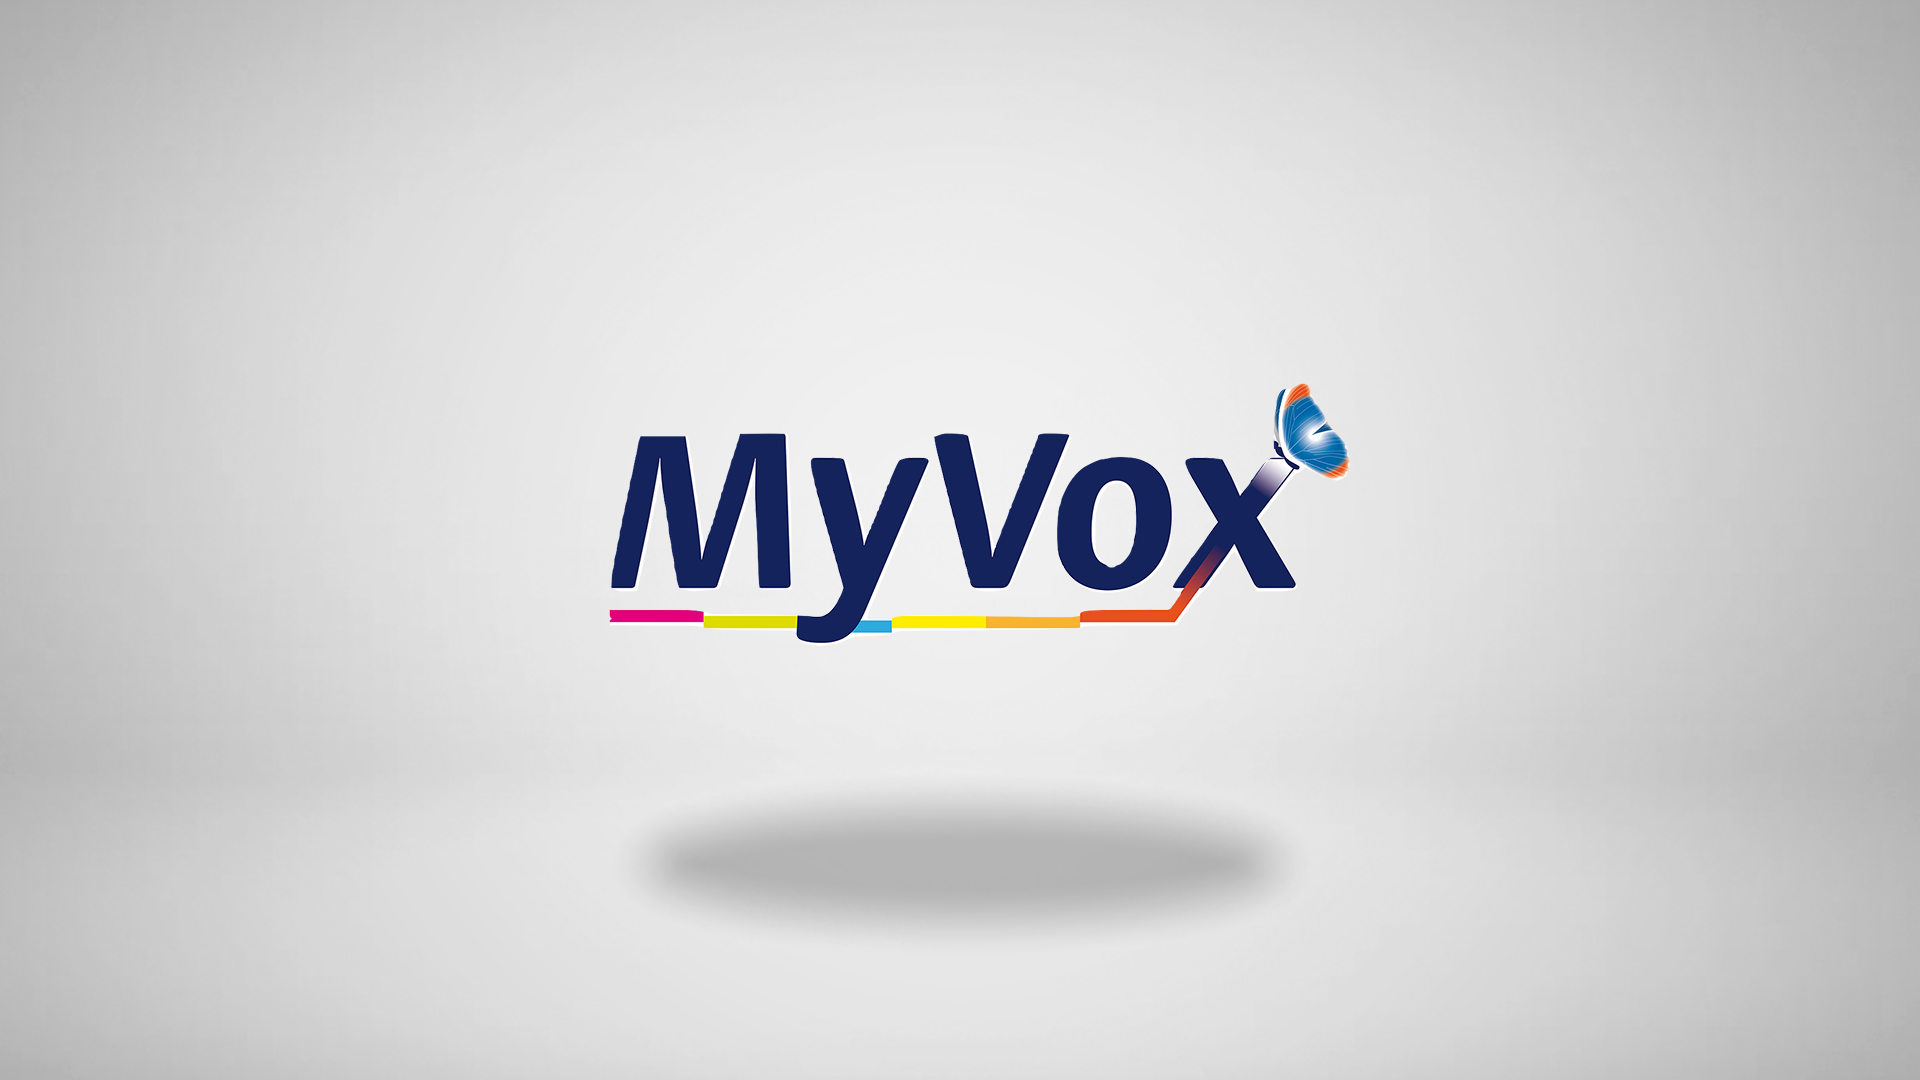 MyVox